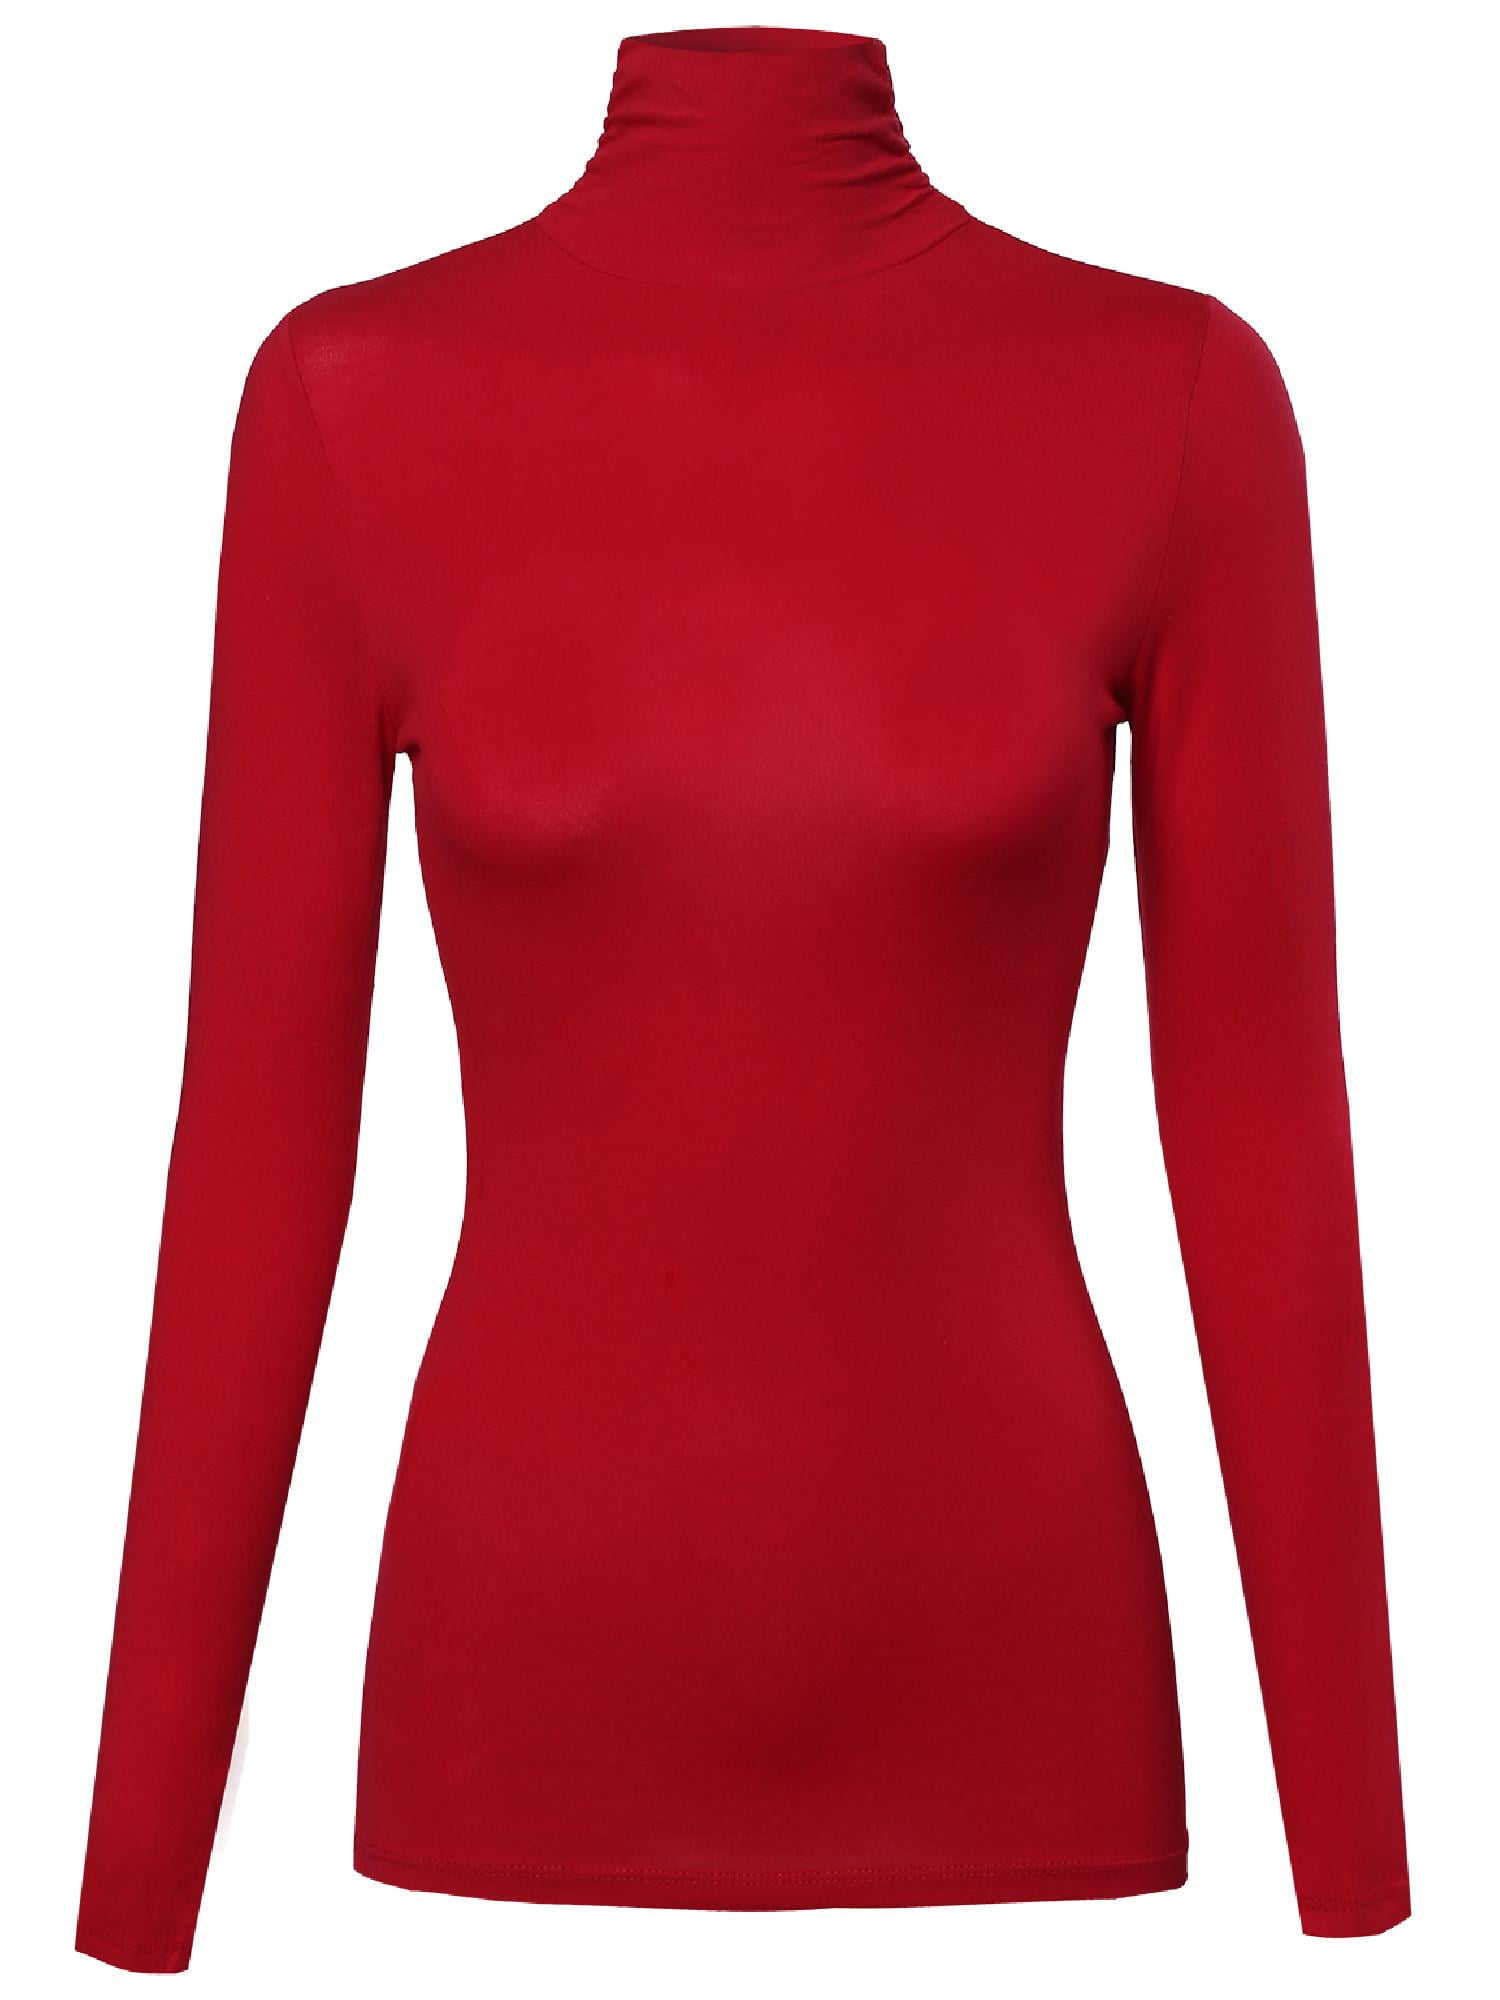 FashionOutfit Women's Basic Long Sleeve Turtleneck Top - Walmart.com